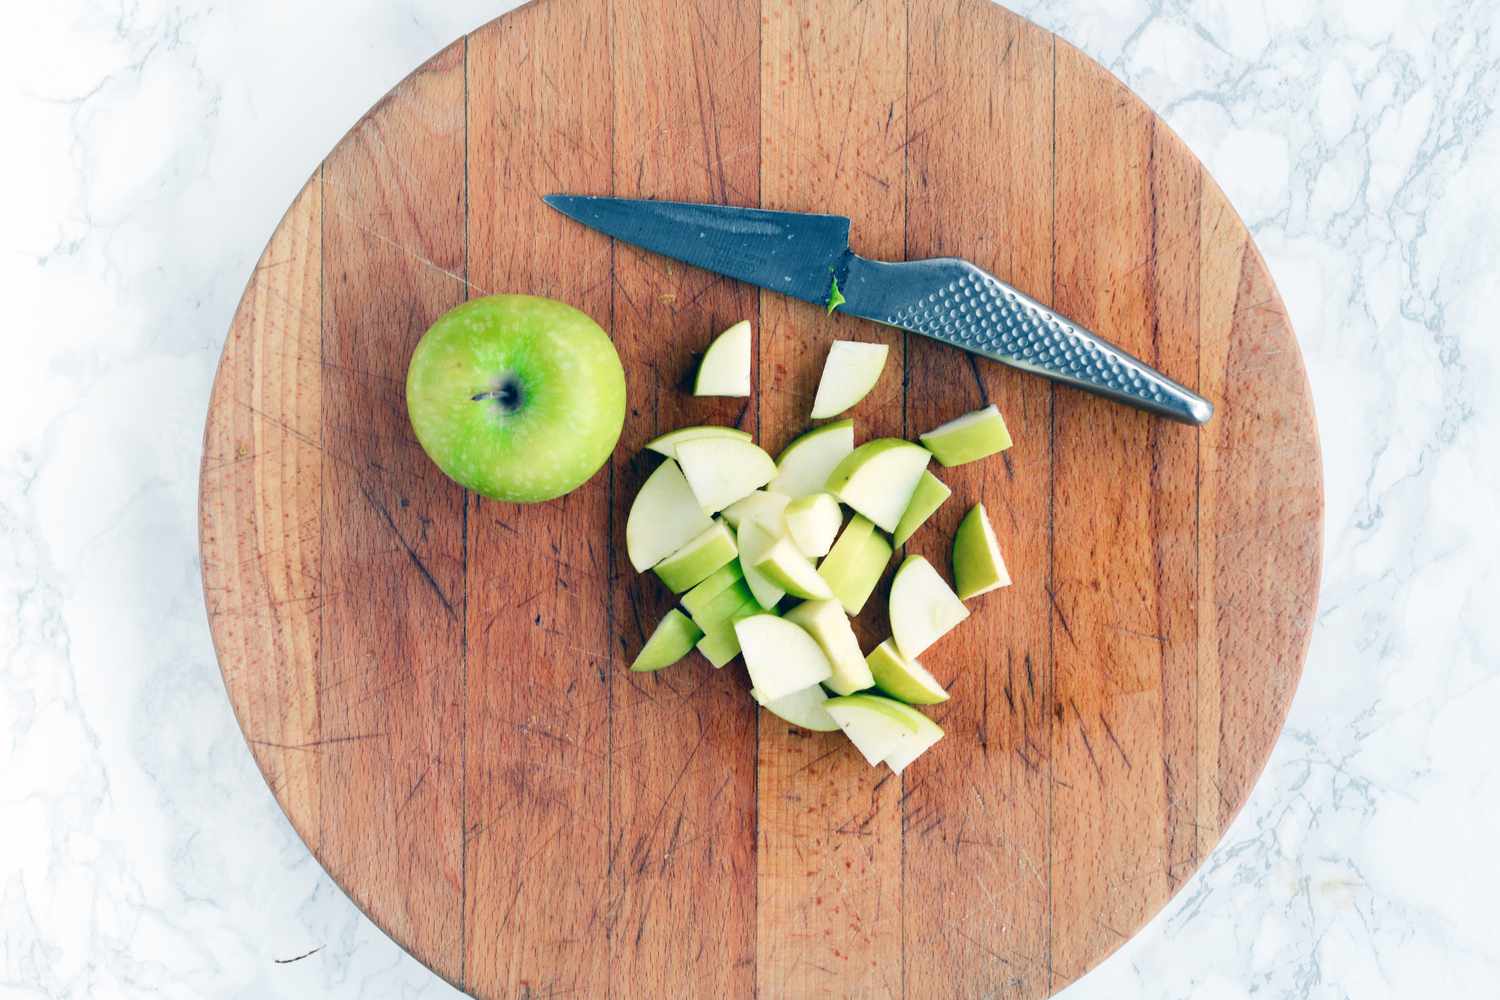 Chopped apples for apple walnut salad